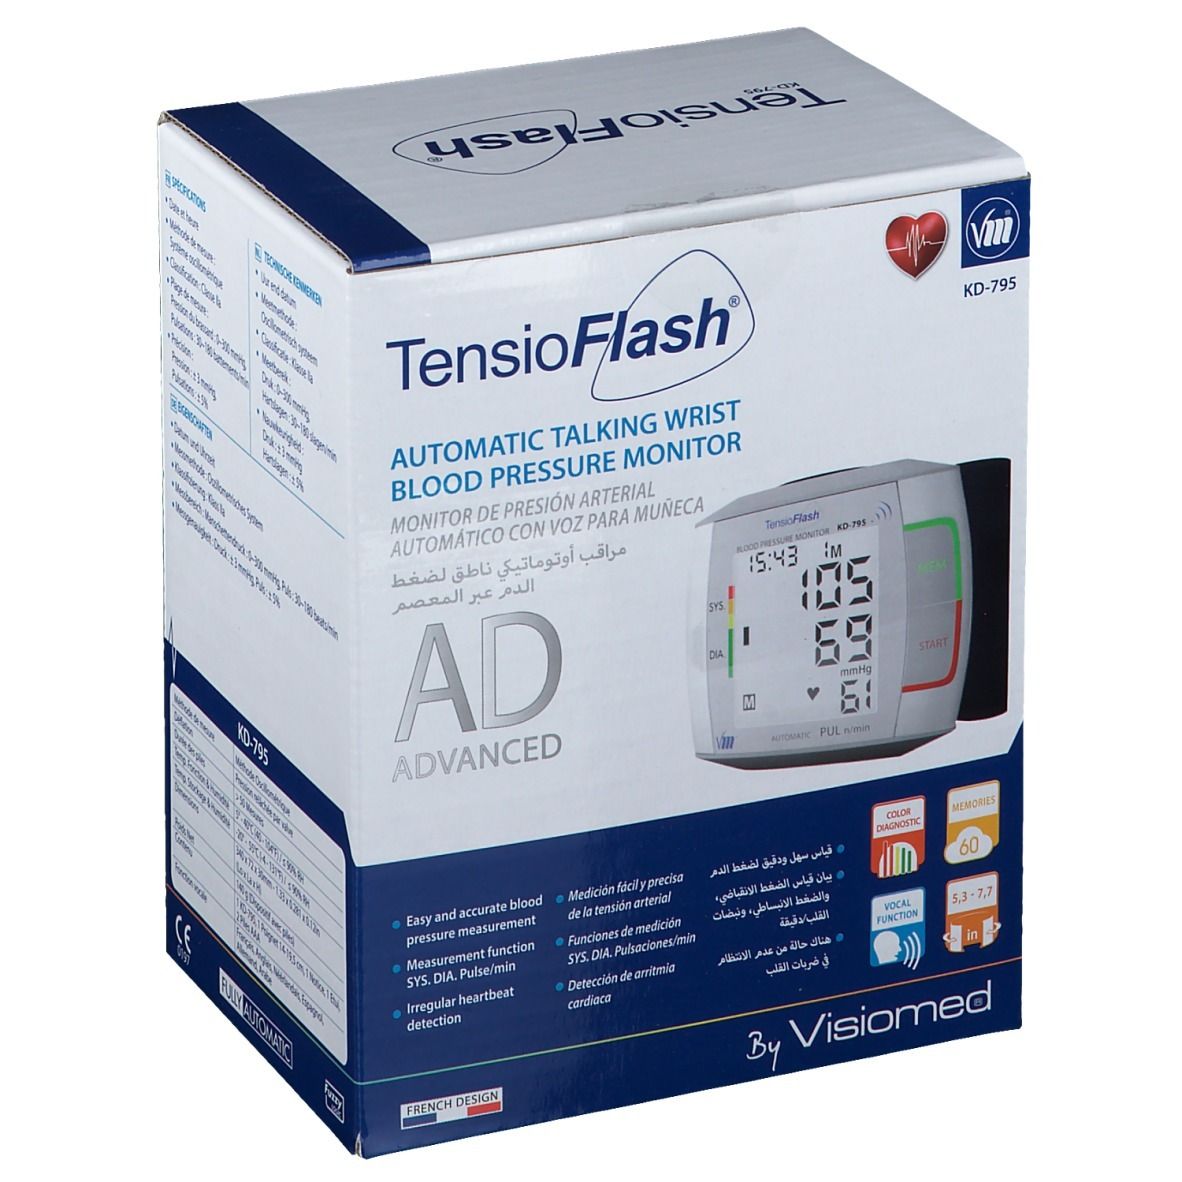 TensioFlash® AD Advanced Monitor de presion arterial